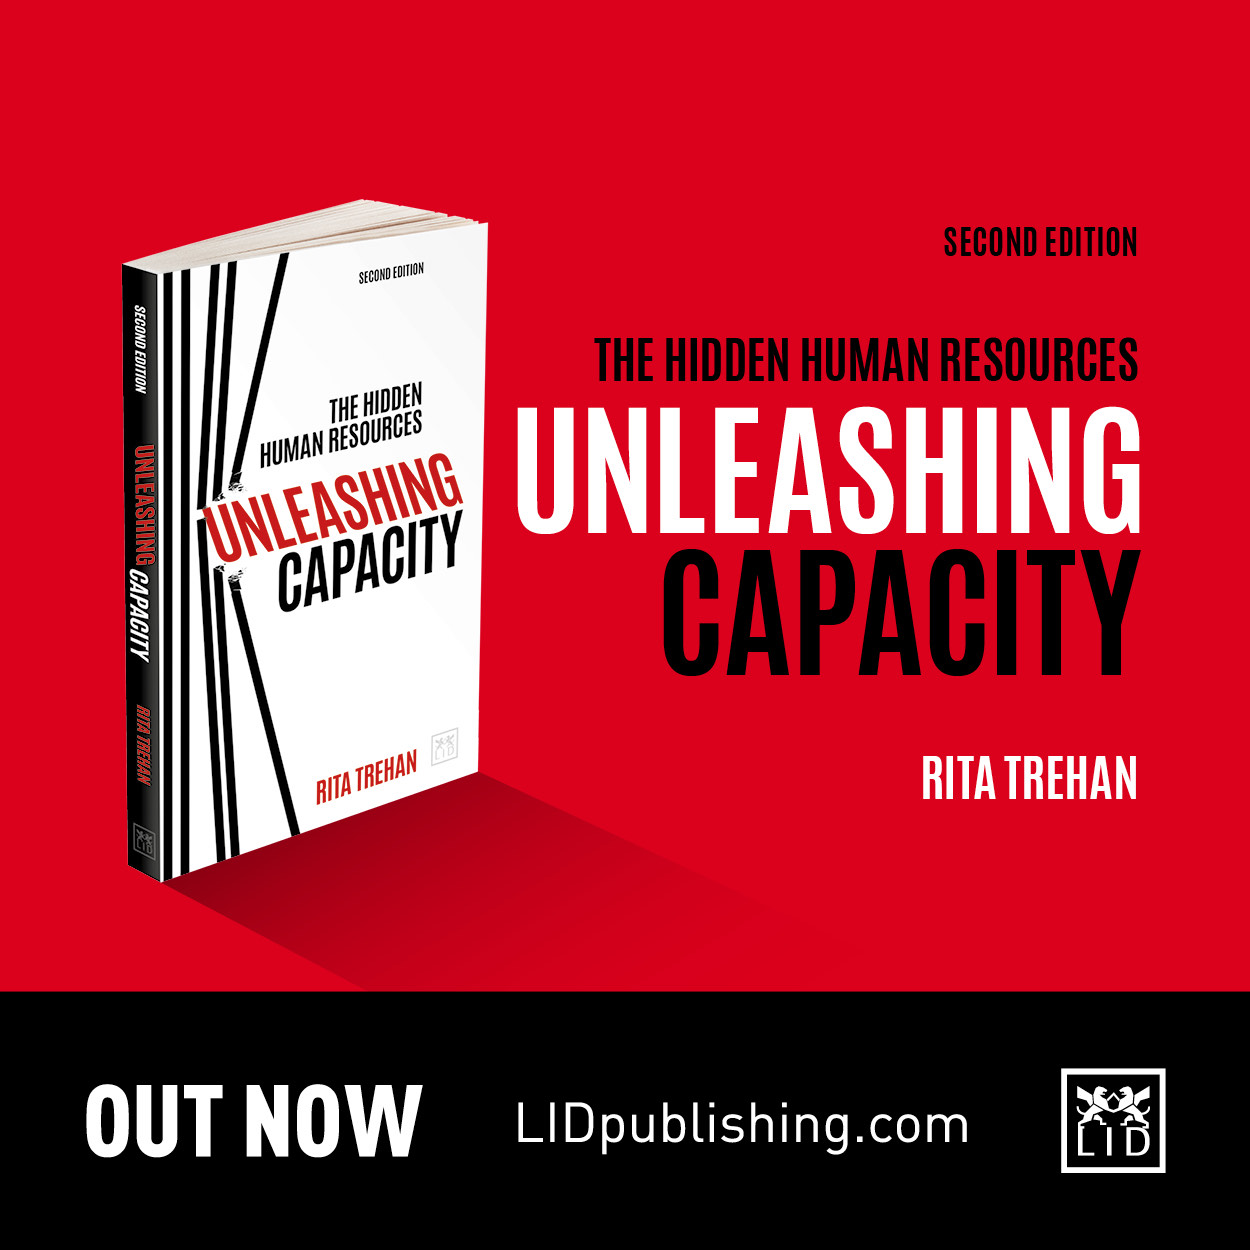 Dare - Rita Trehan, unleasing capacity book